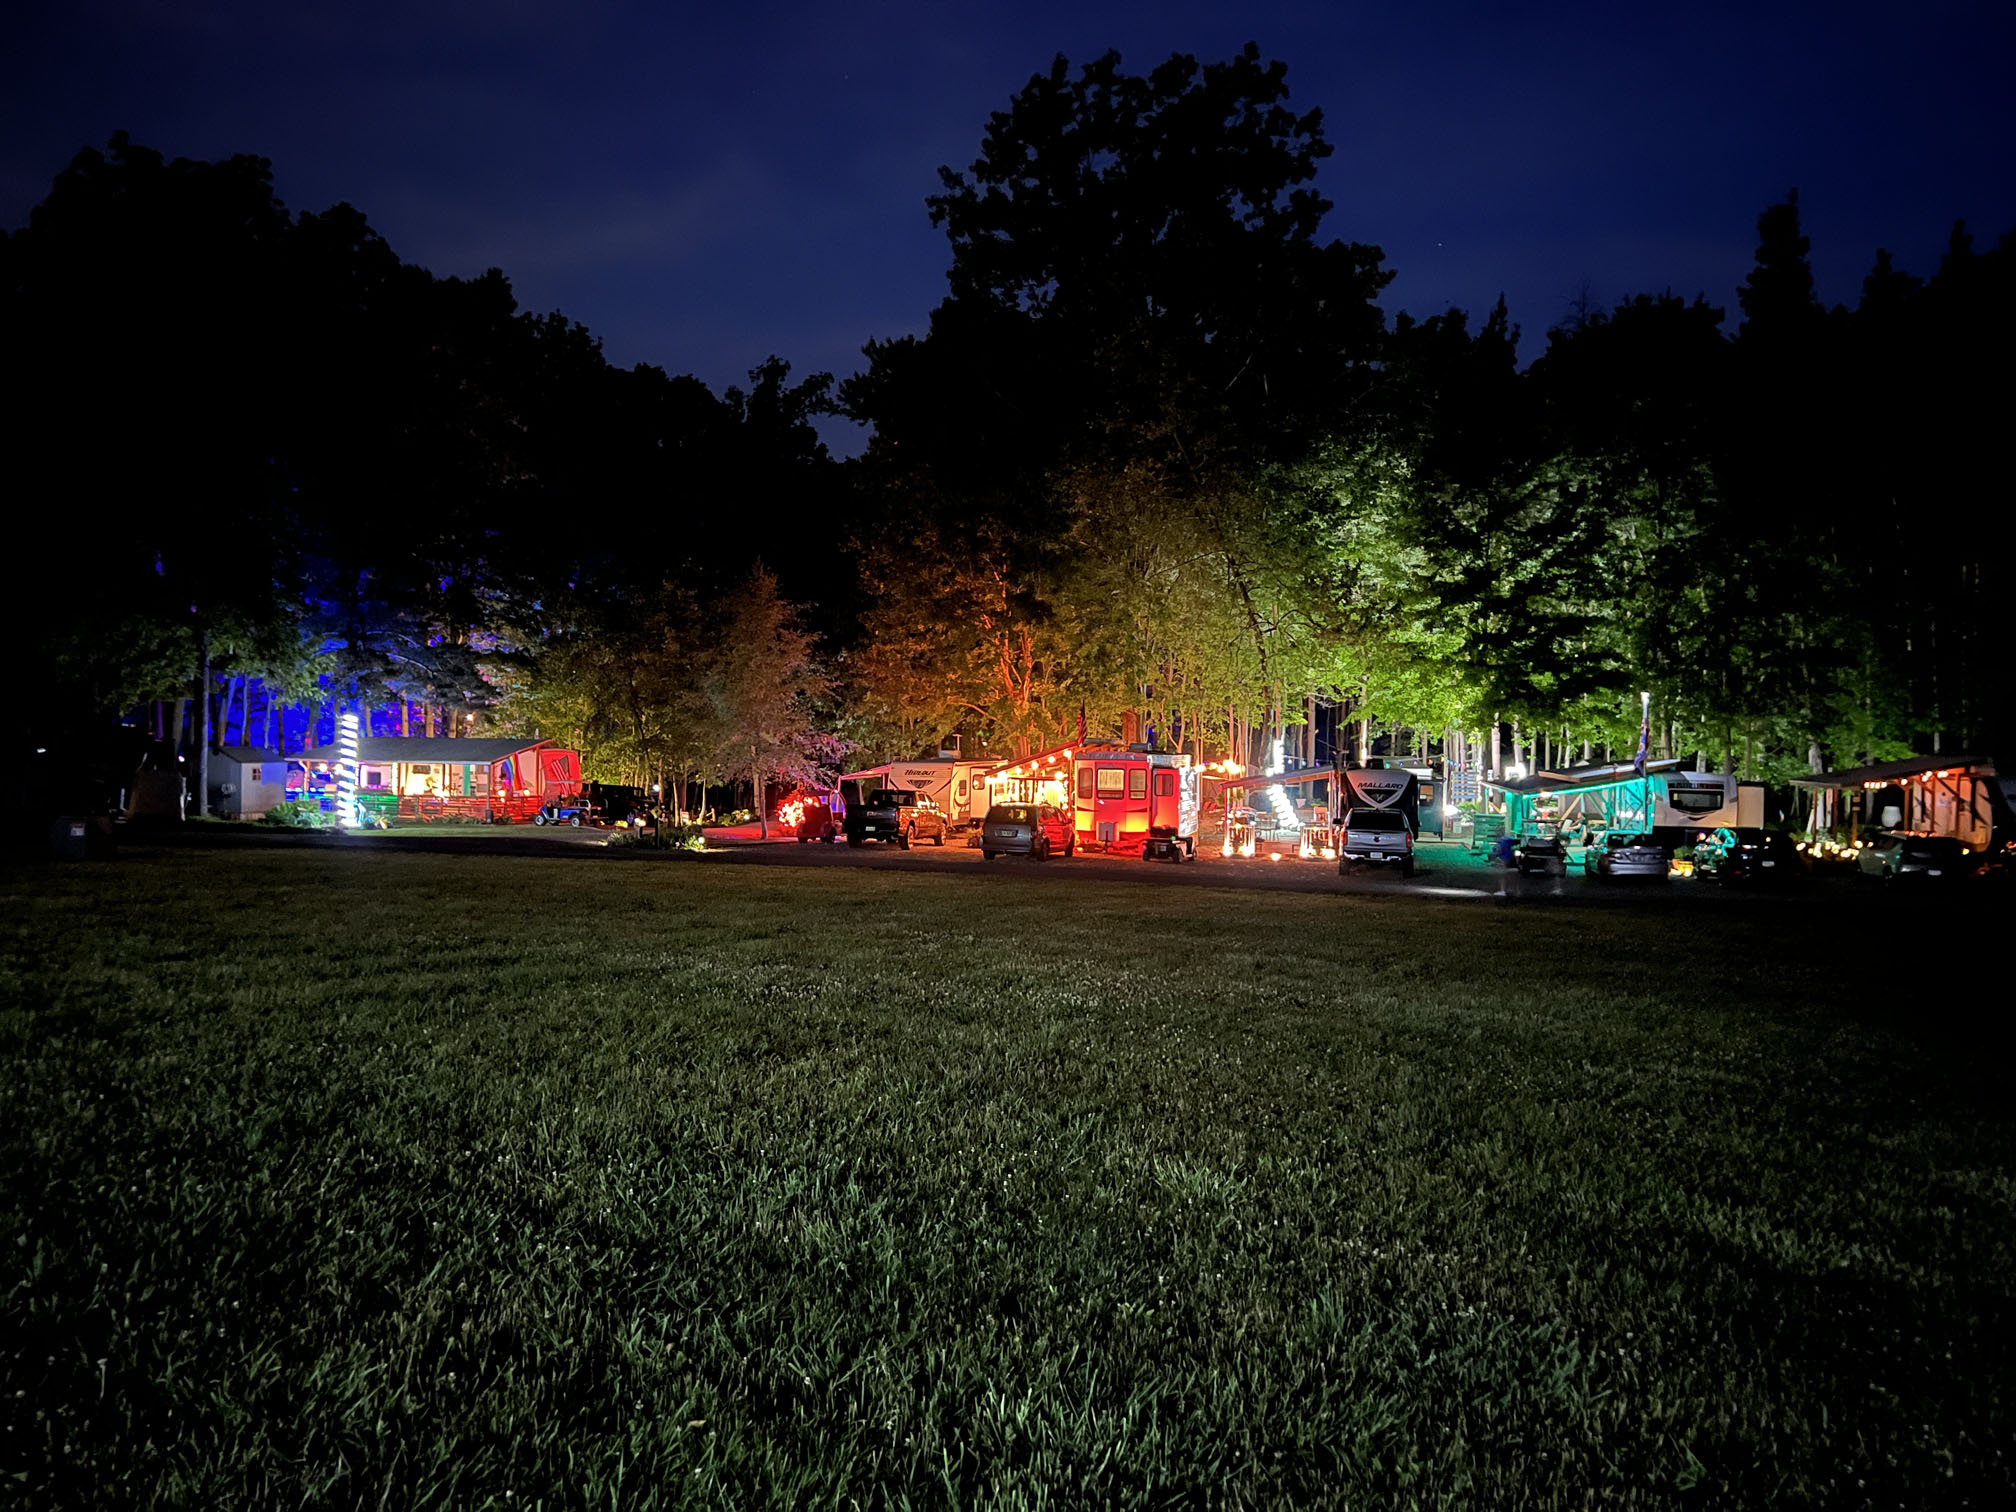 Row of seasonal camp sites lit up at night